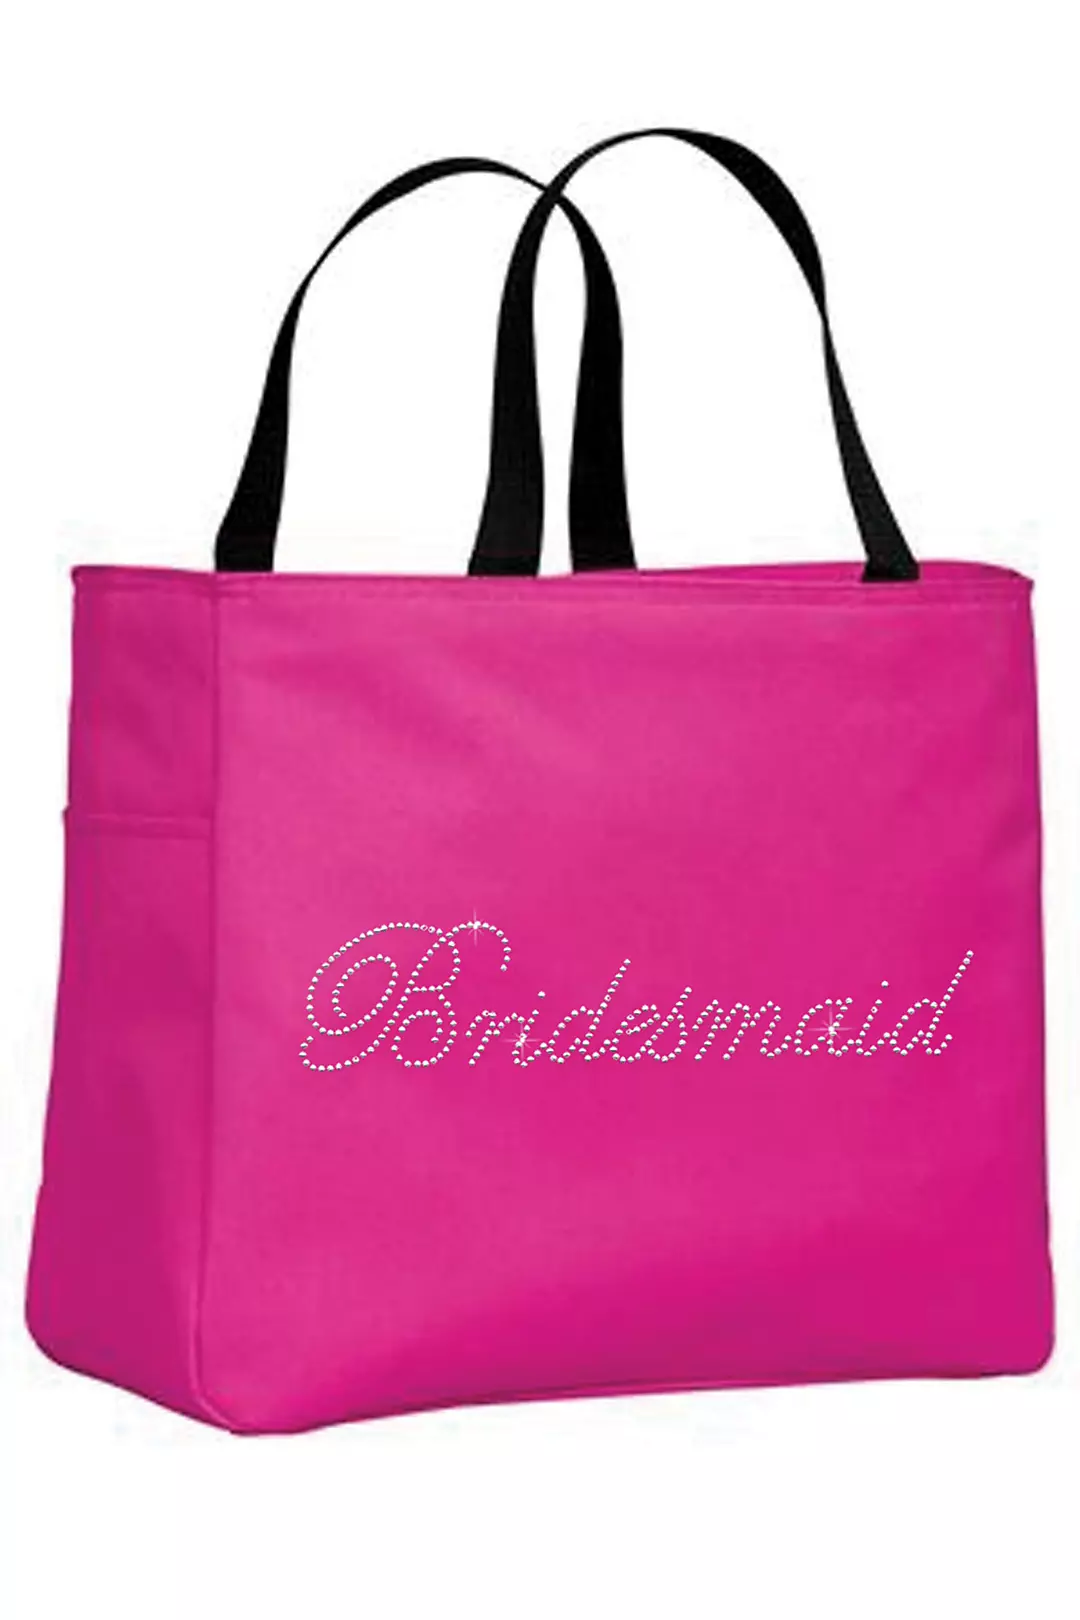 Rhinestone Bridesmaid Tote Bag Image